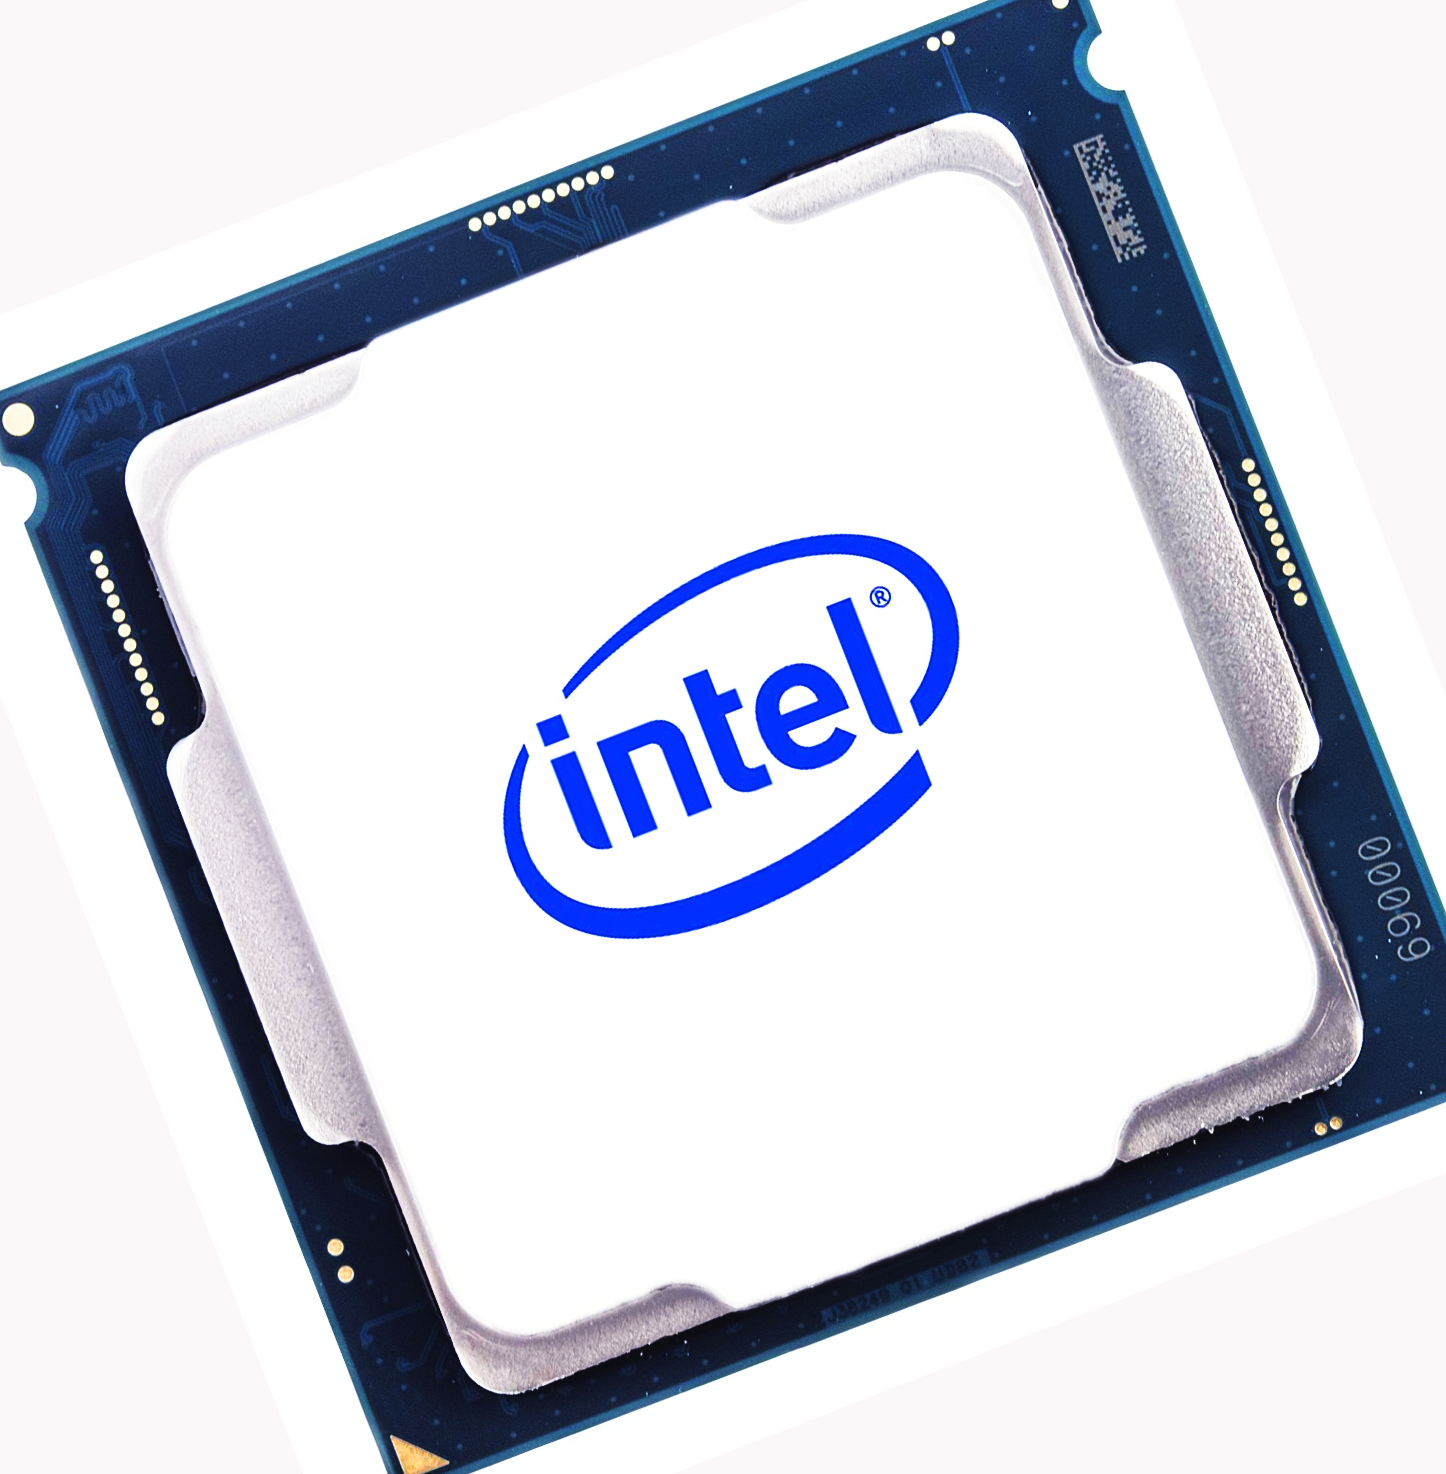 Intel Hexacore processor